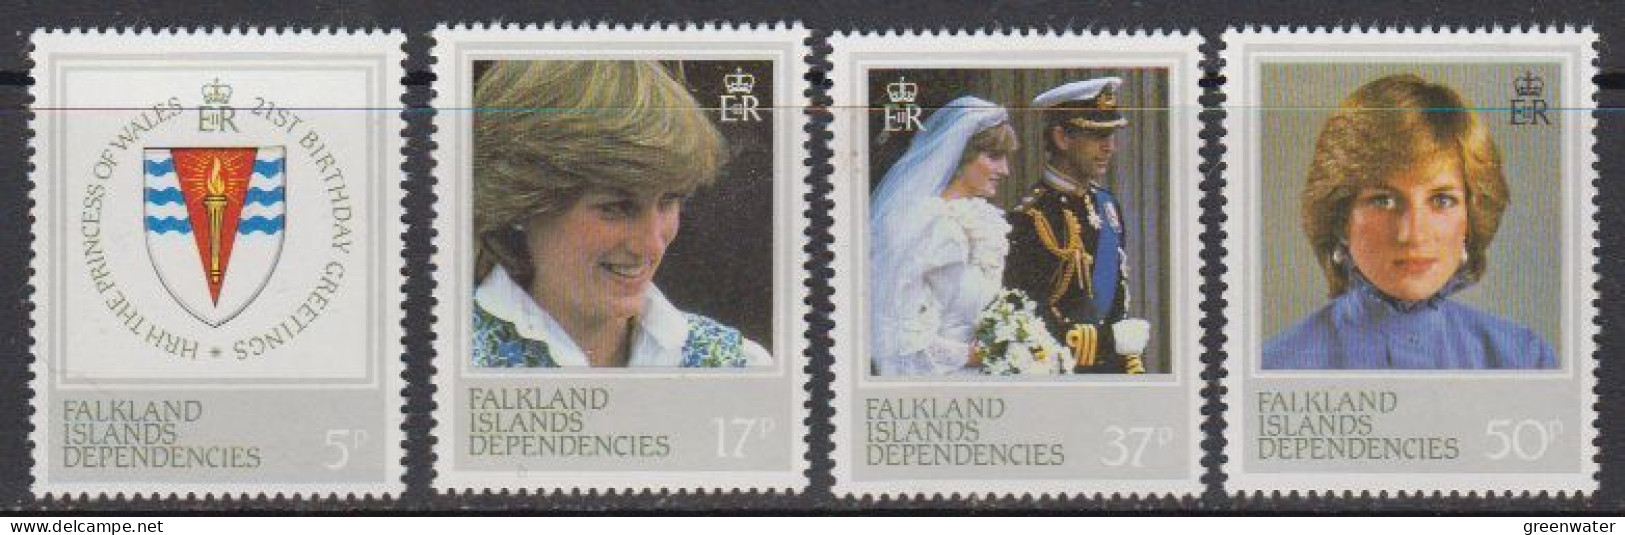 Falkland Islands Dependencies (FID) 1982 21st Birthday Princess Of Wales 4v ** Mnh (59842B) - Géorgie Du Sud